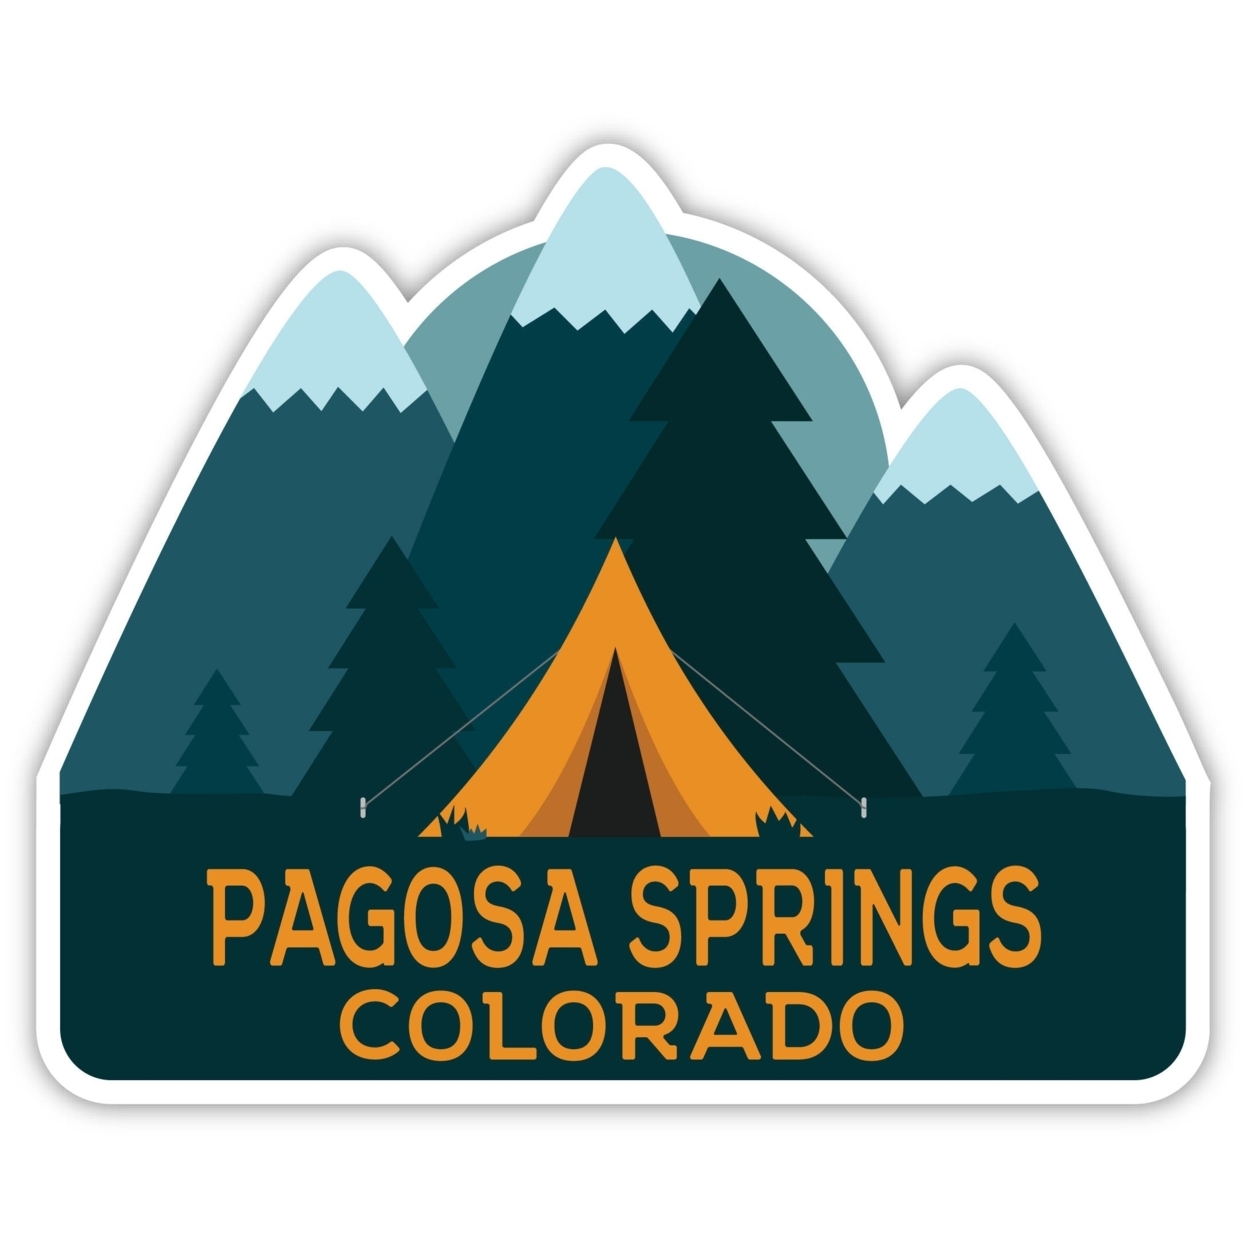 Pagosa Springs Colorado Souvenir Decorative Stickers (Choose Theme And Size) - Single Unit, 2-Inch, Adventures Awaits